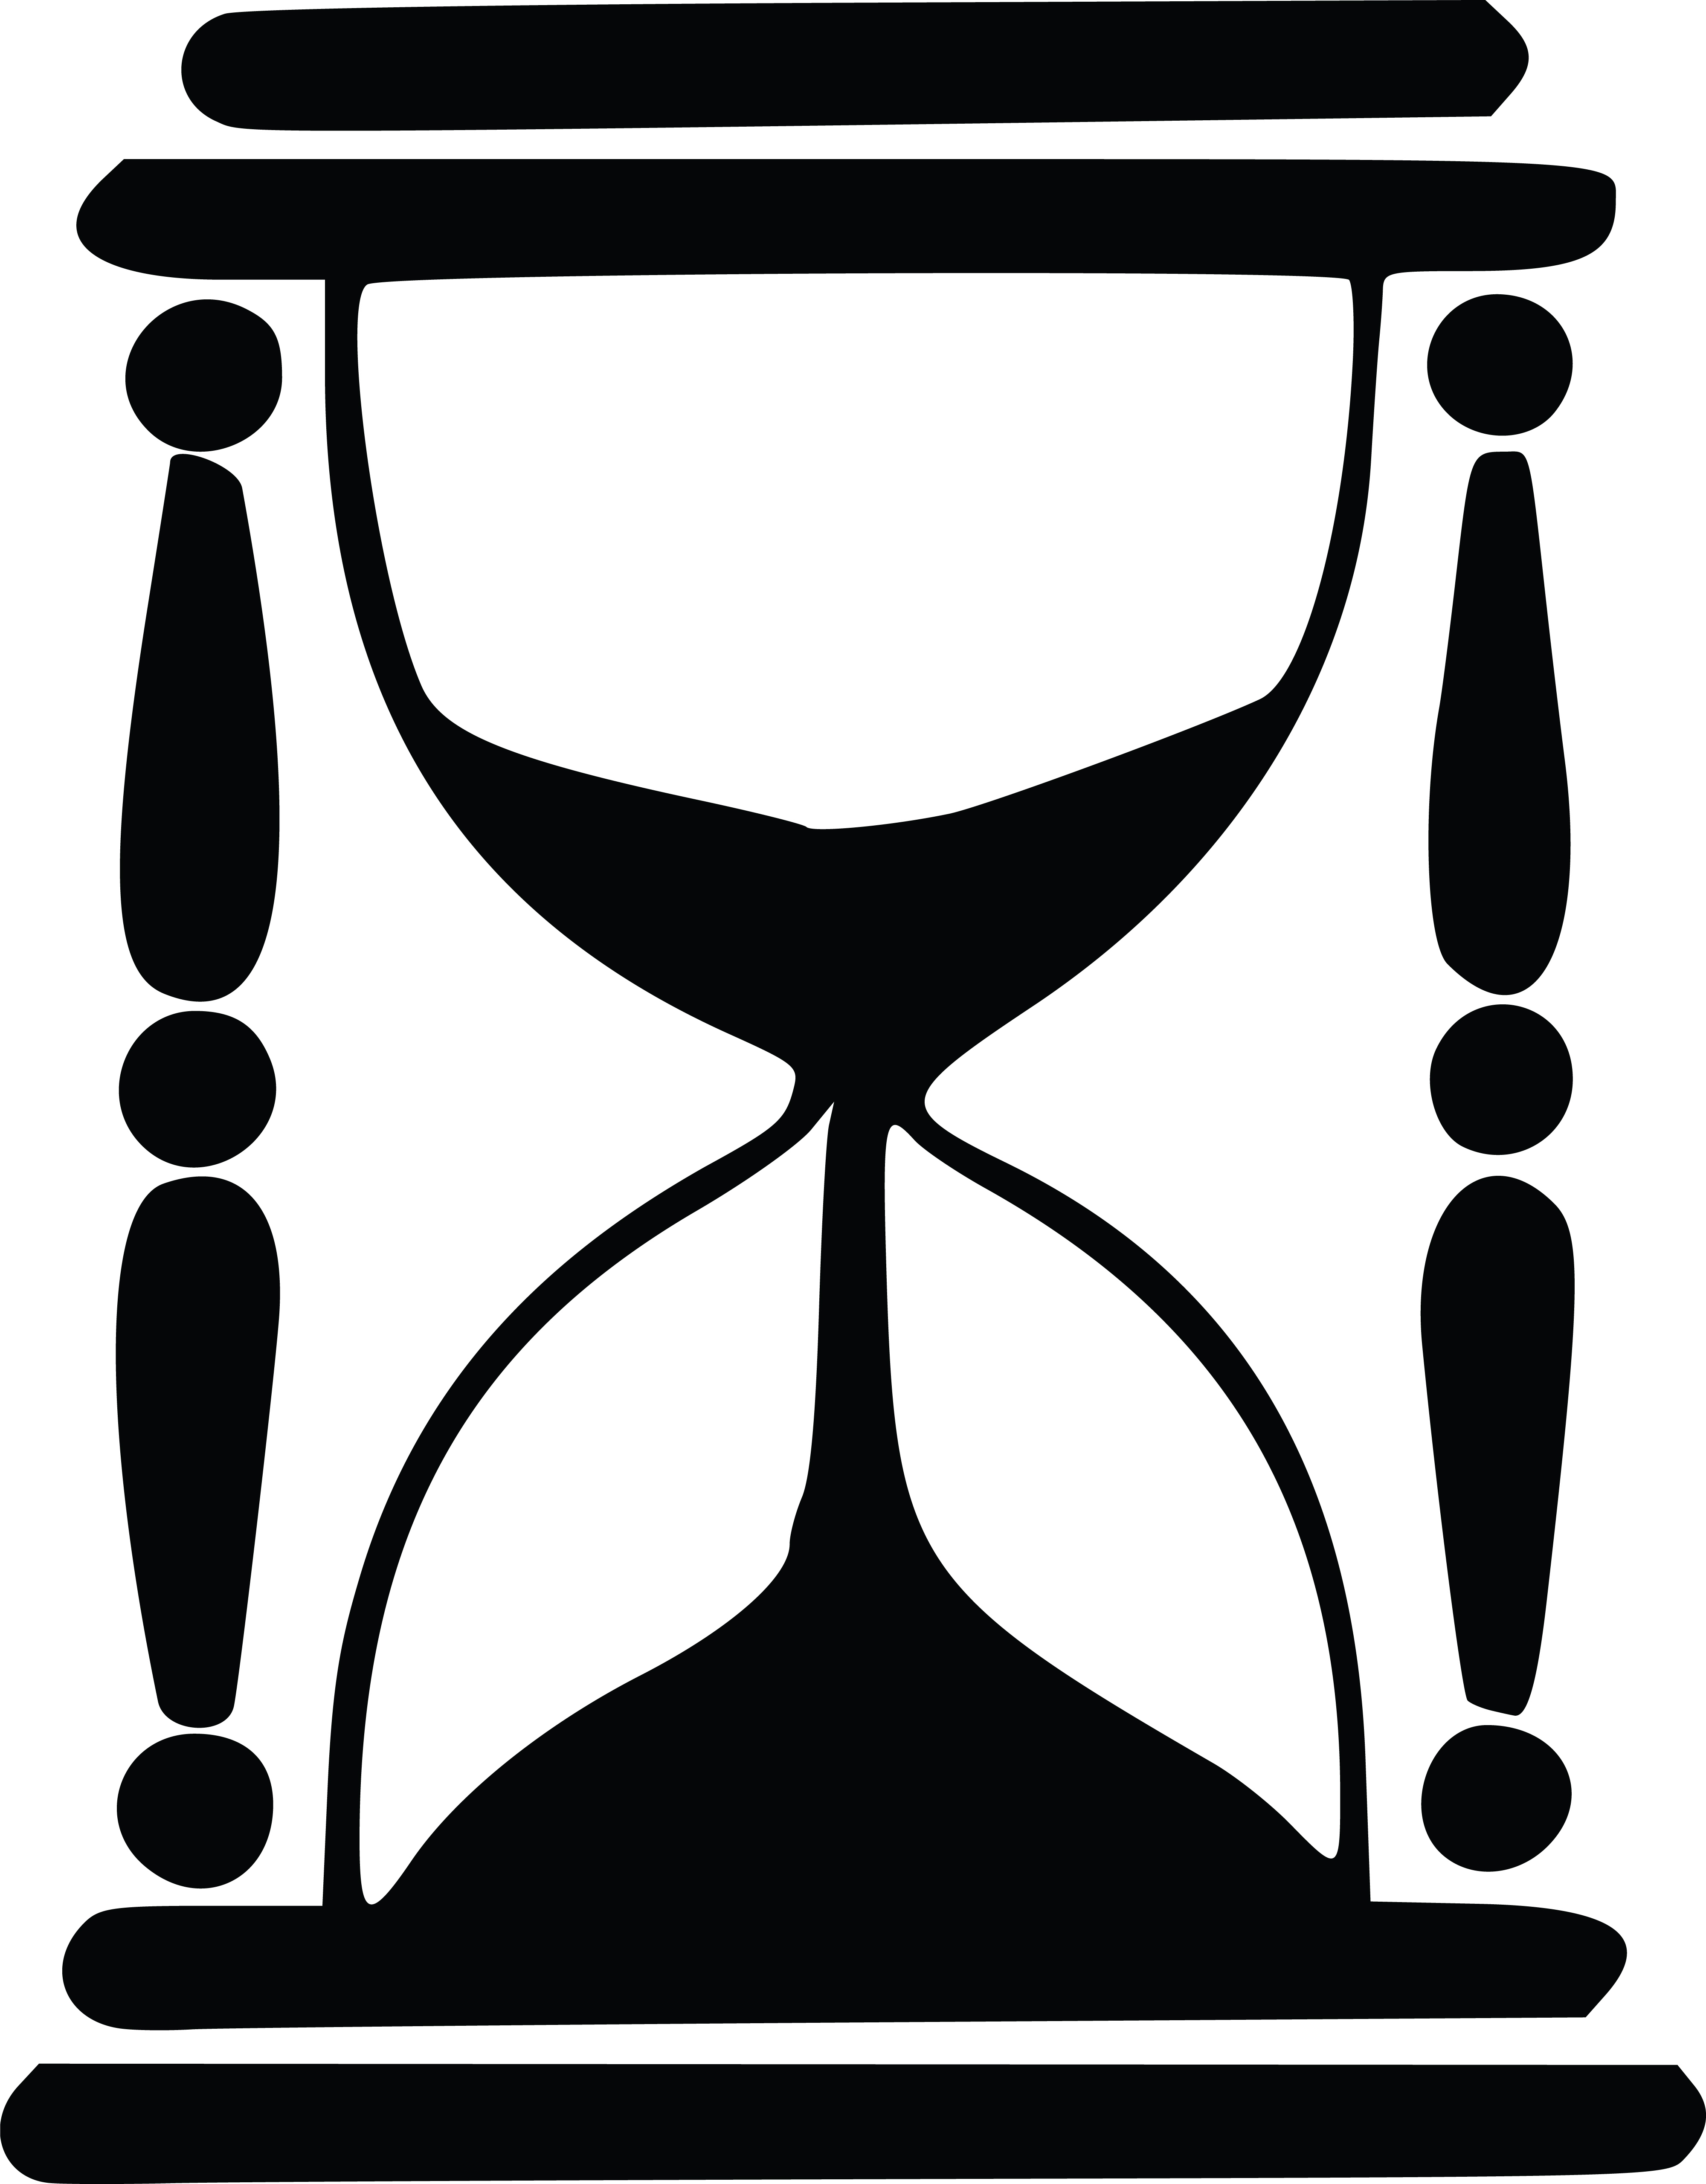 Hourglass clip art.